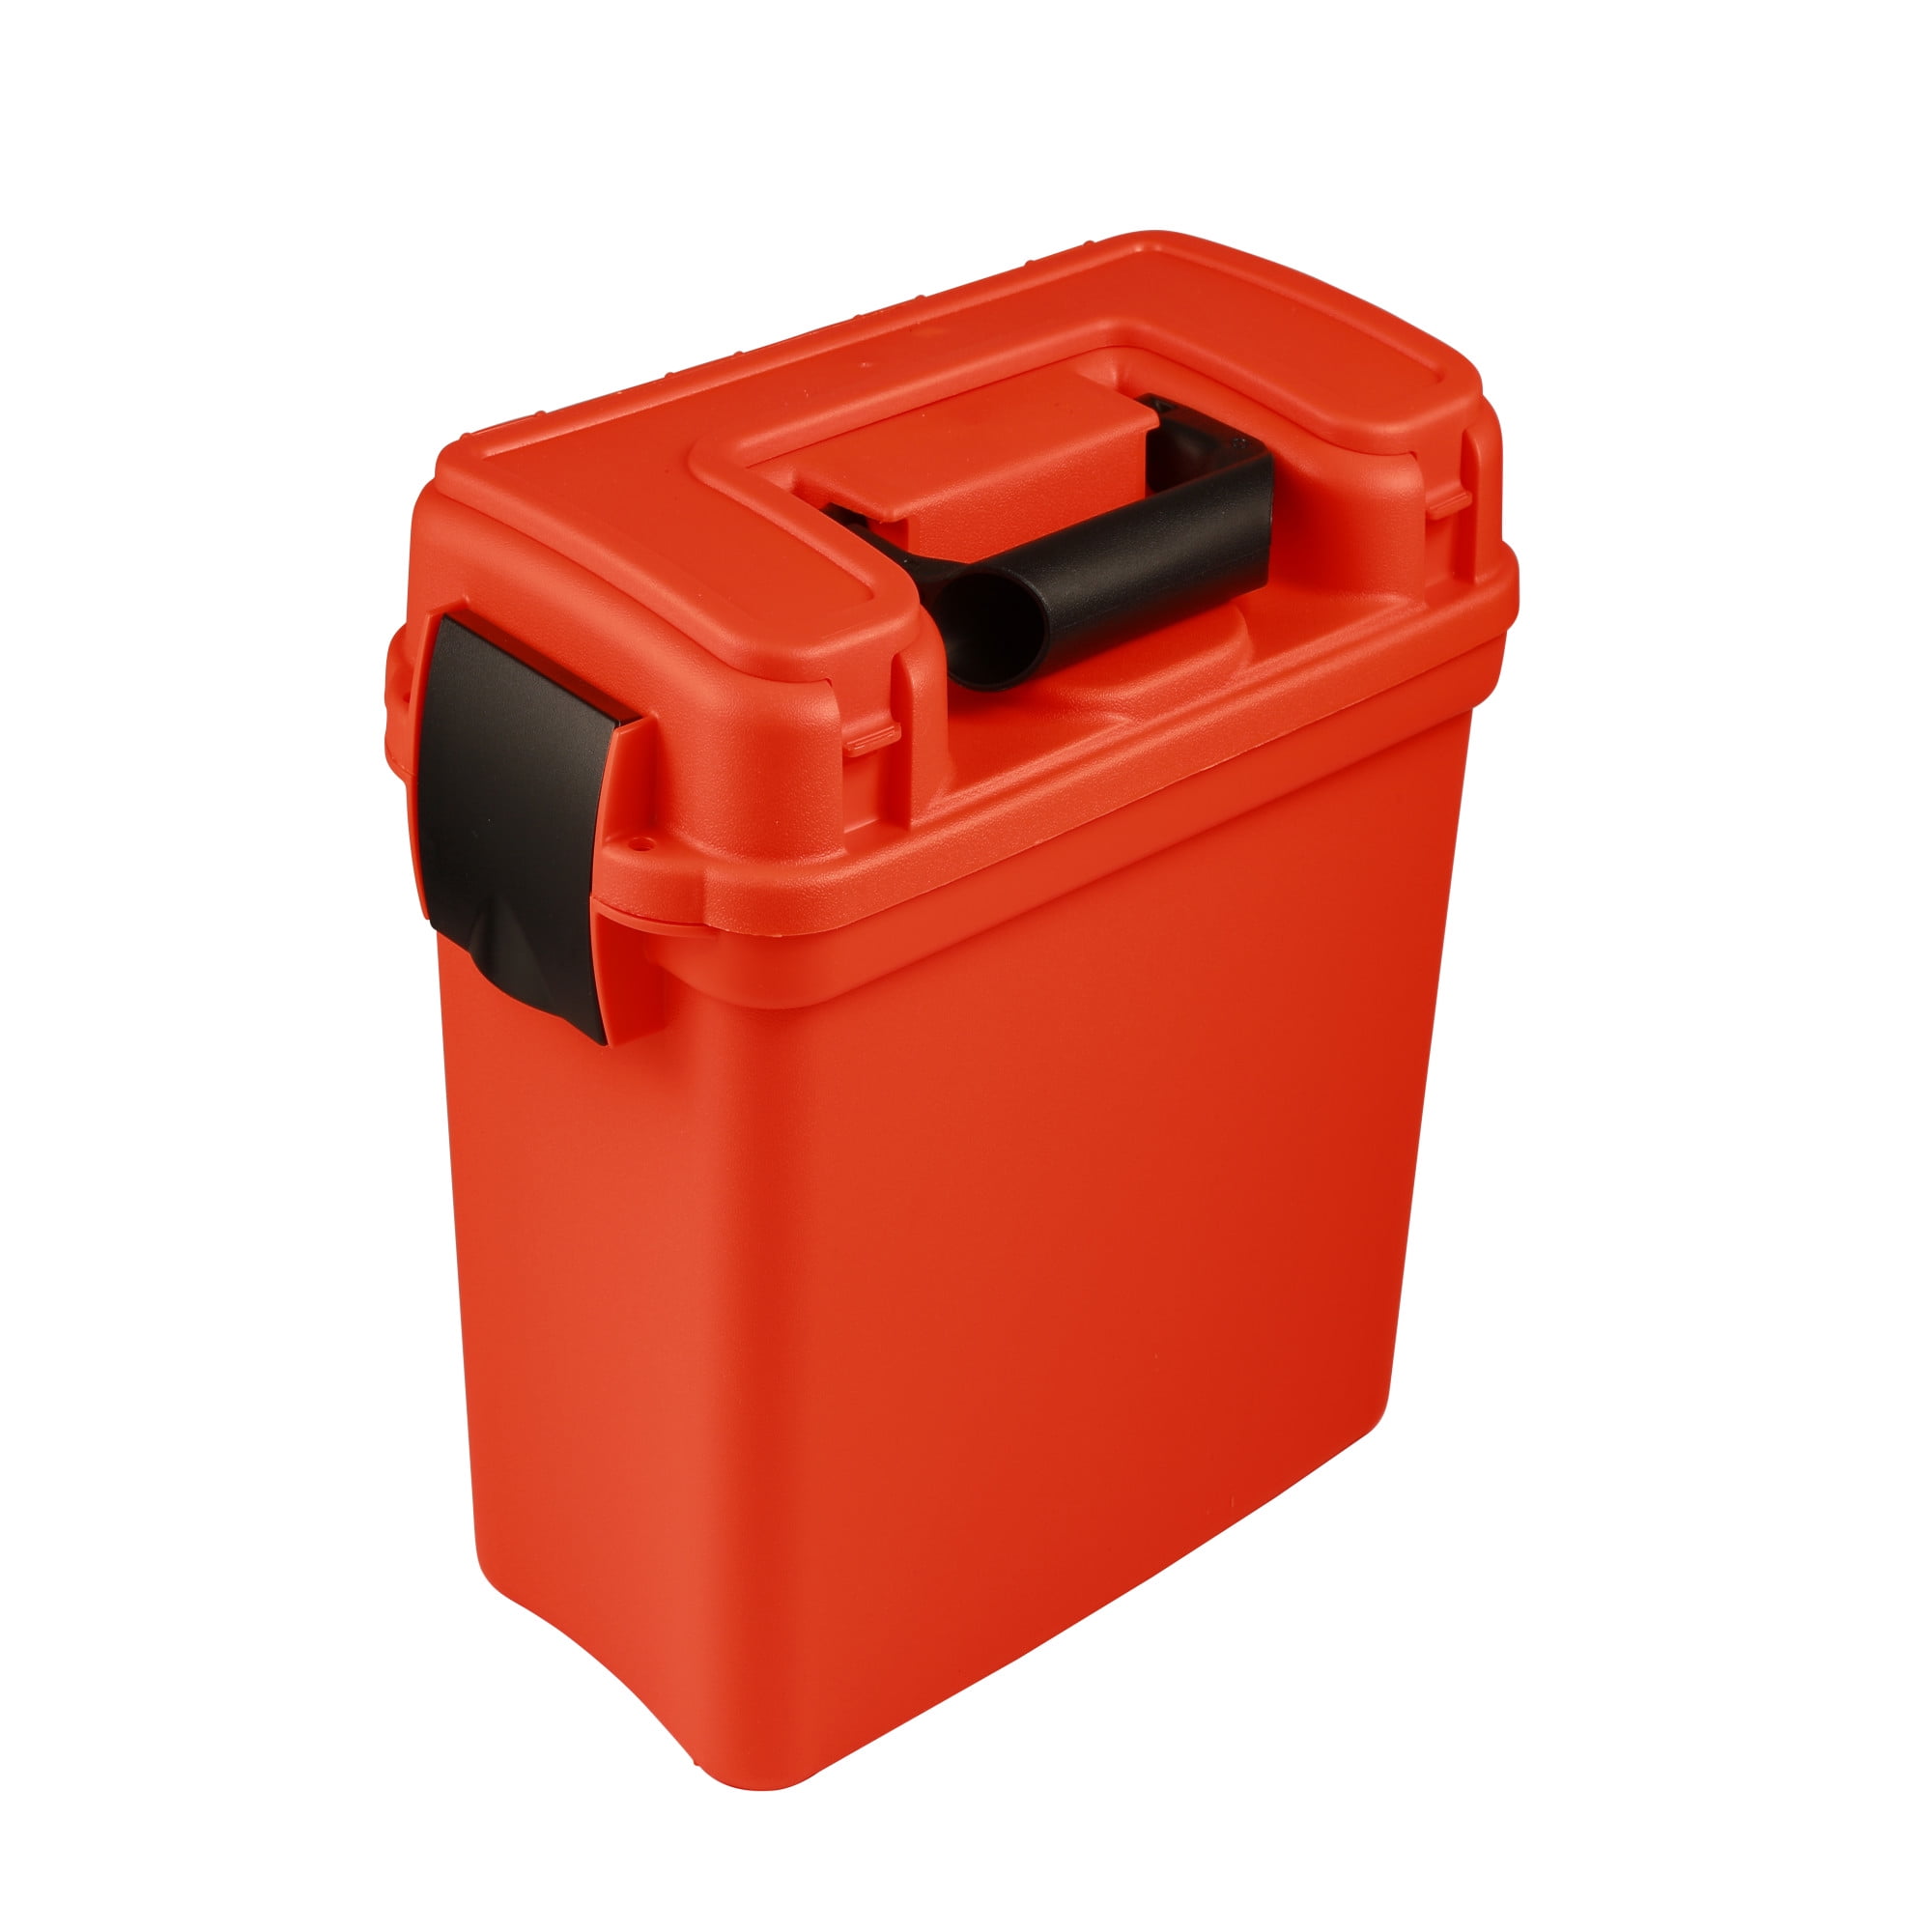 LOT of 4 Emergency & Evacuation Kit Extra Large Waterproof Dry Storage Box